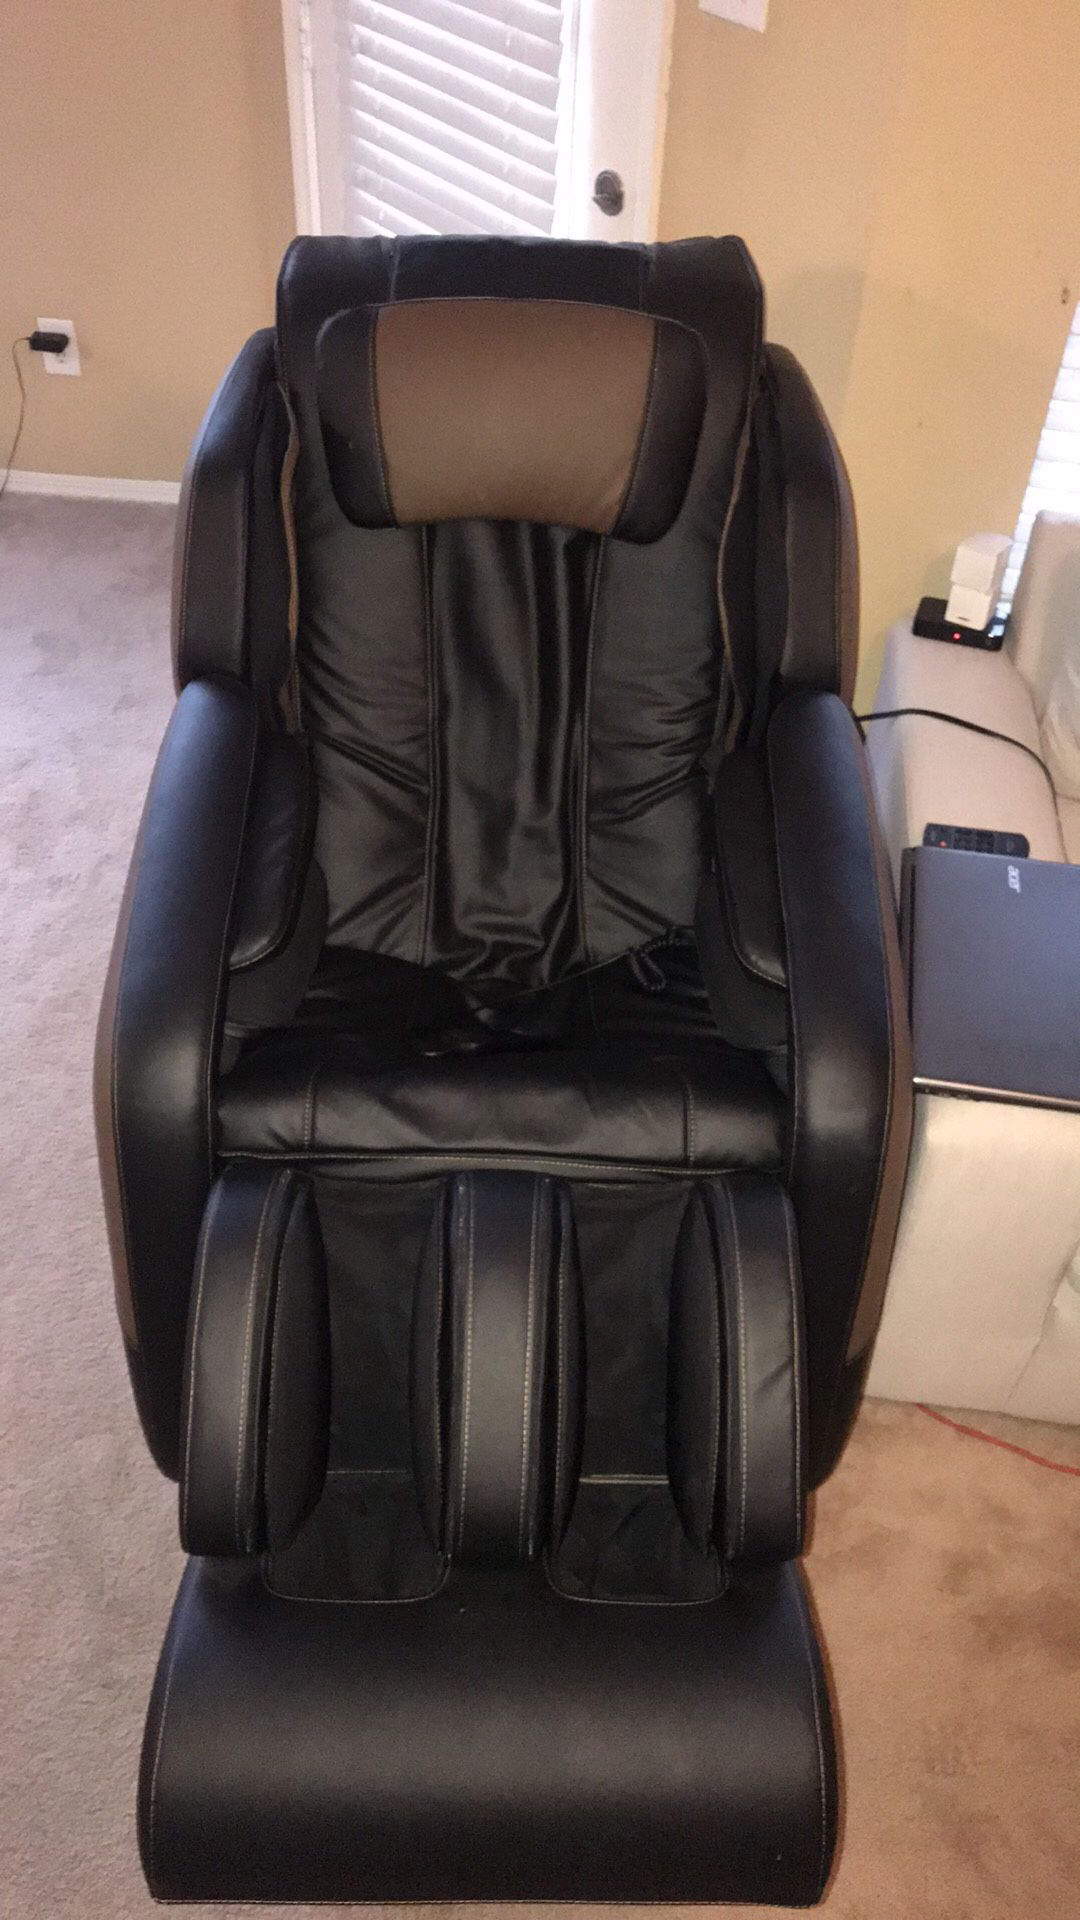 Renew Zero Gravity Massage Chair By Brookstone Model 903363 2 Yrs Warranty Remaining For Sale In Austin